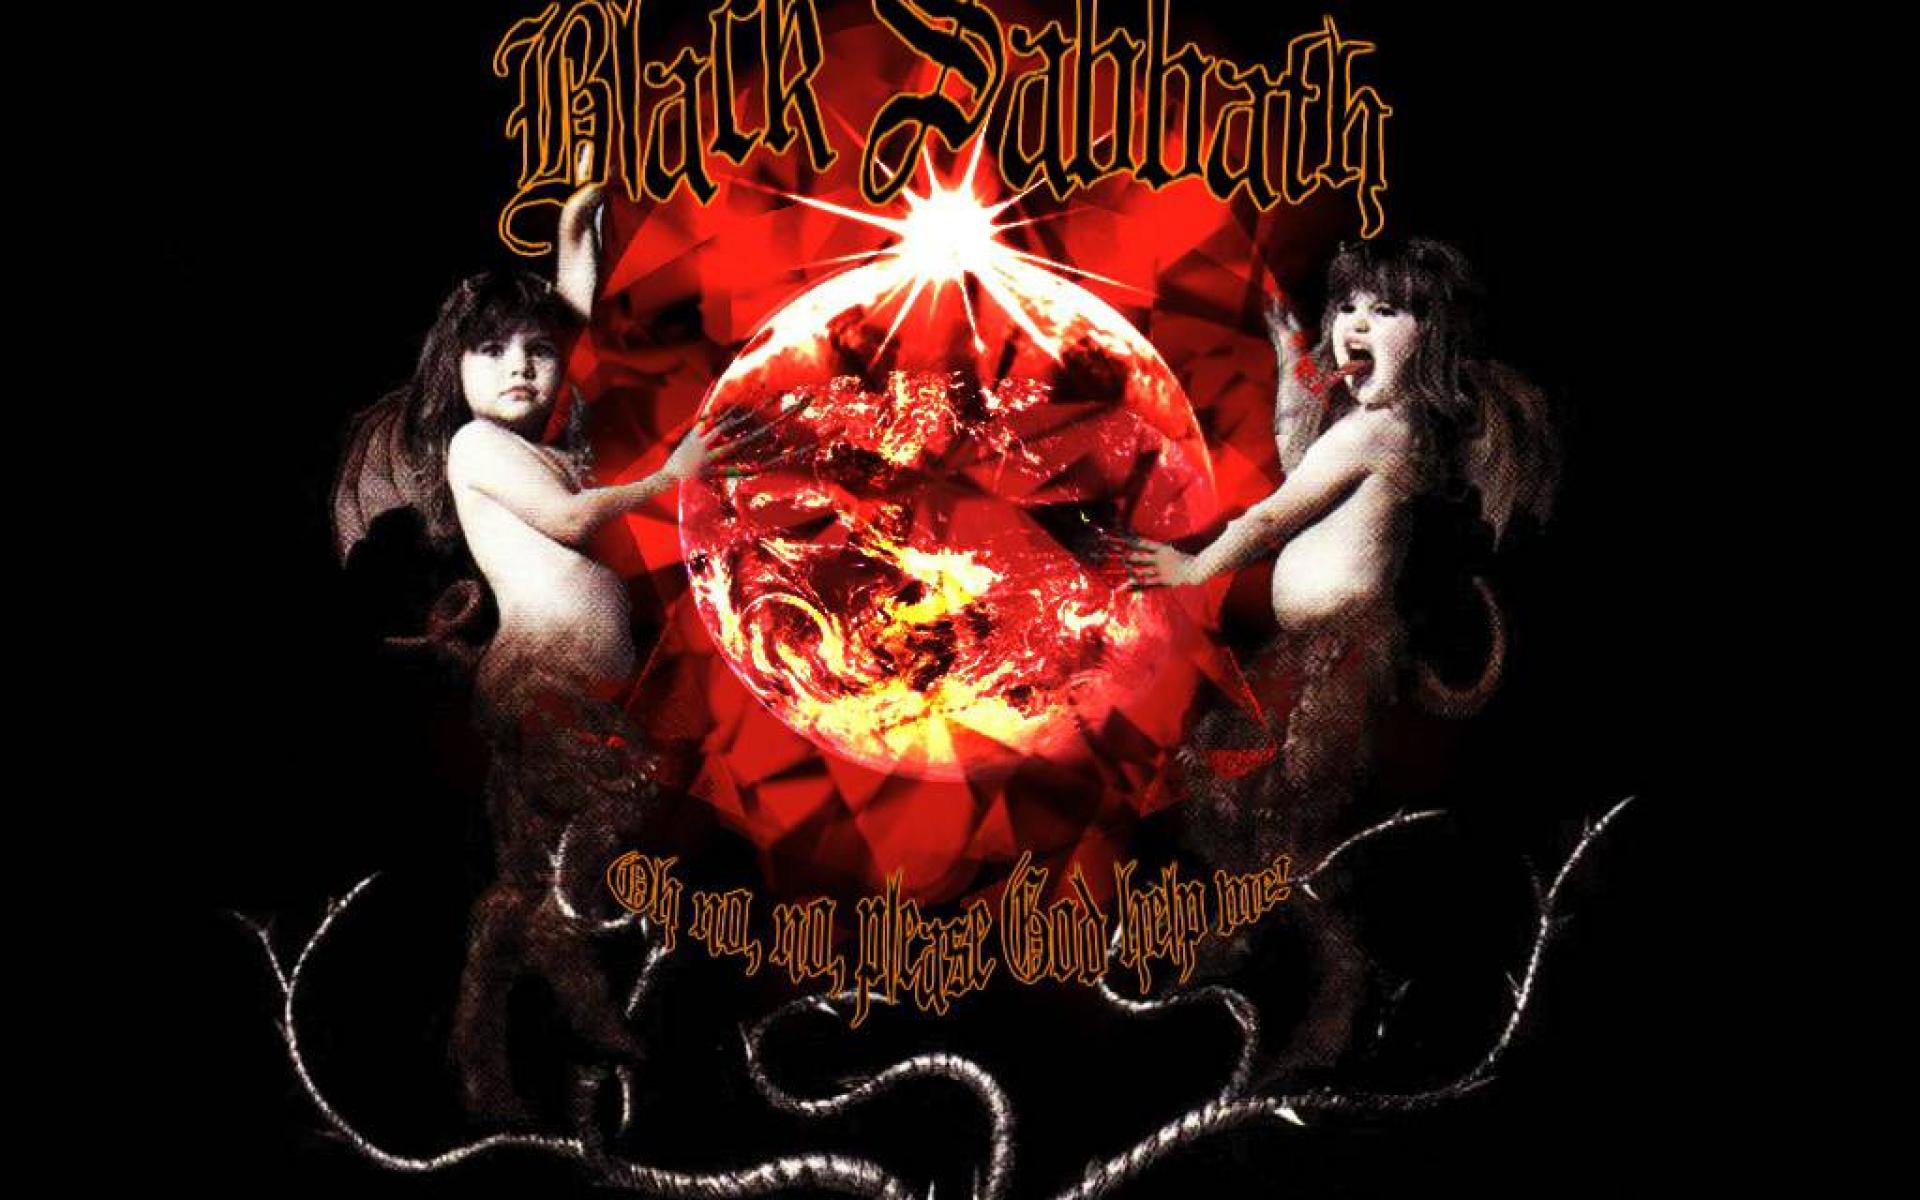 Blacksabbath Black Sabbath Wallpaper Hq